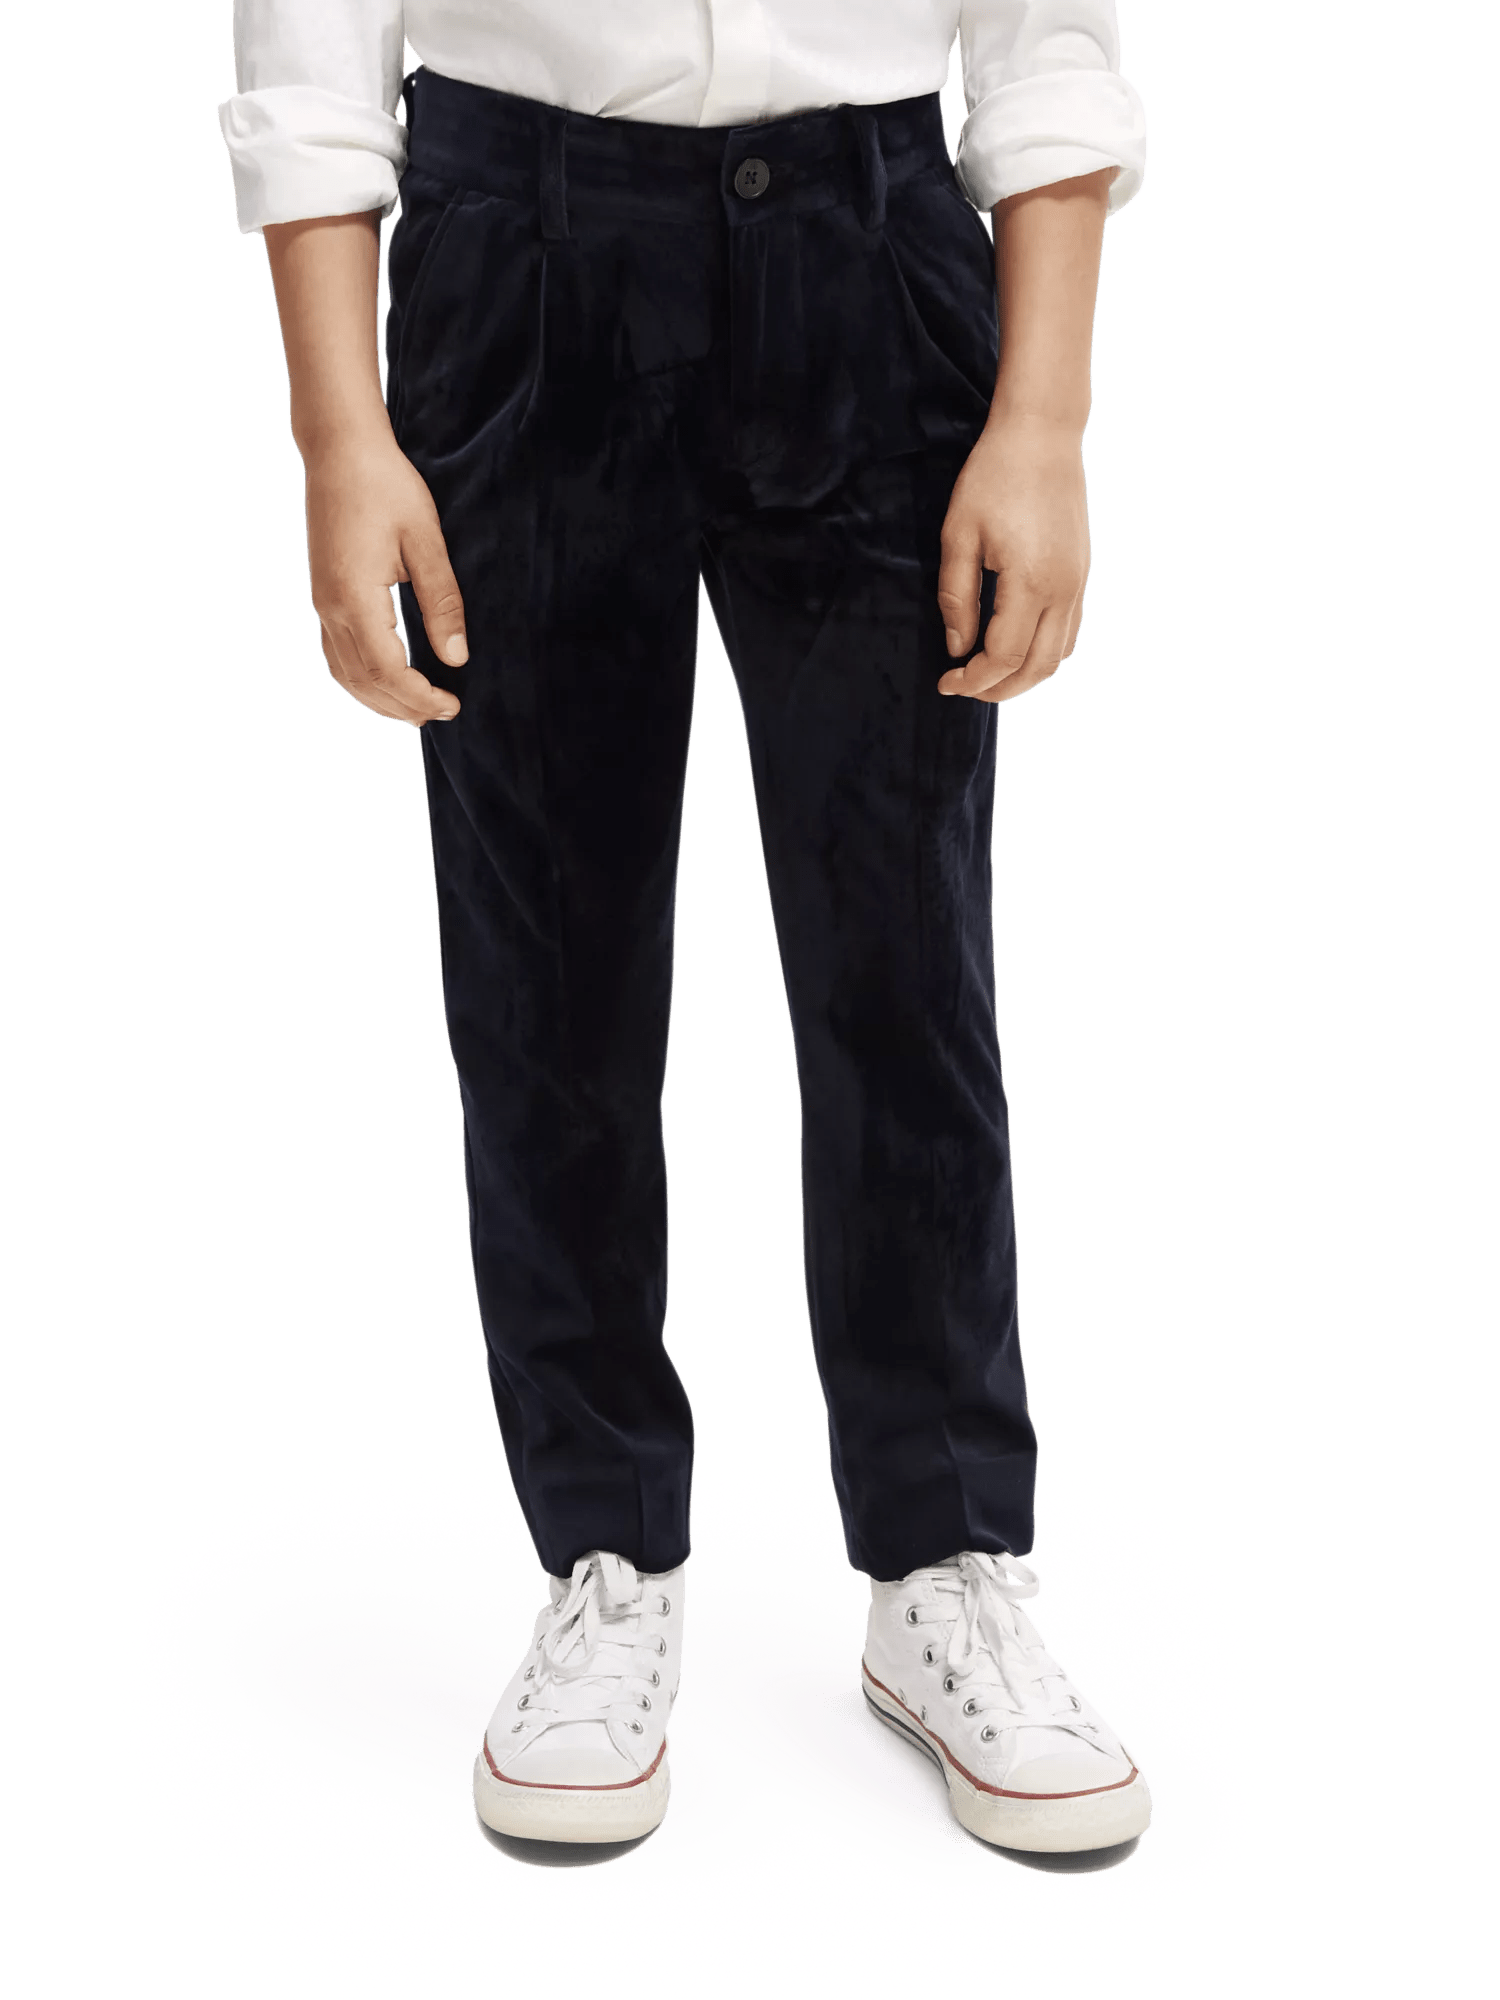 Black Velvet Pants Men - Slim Fit Chino Pants